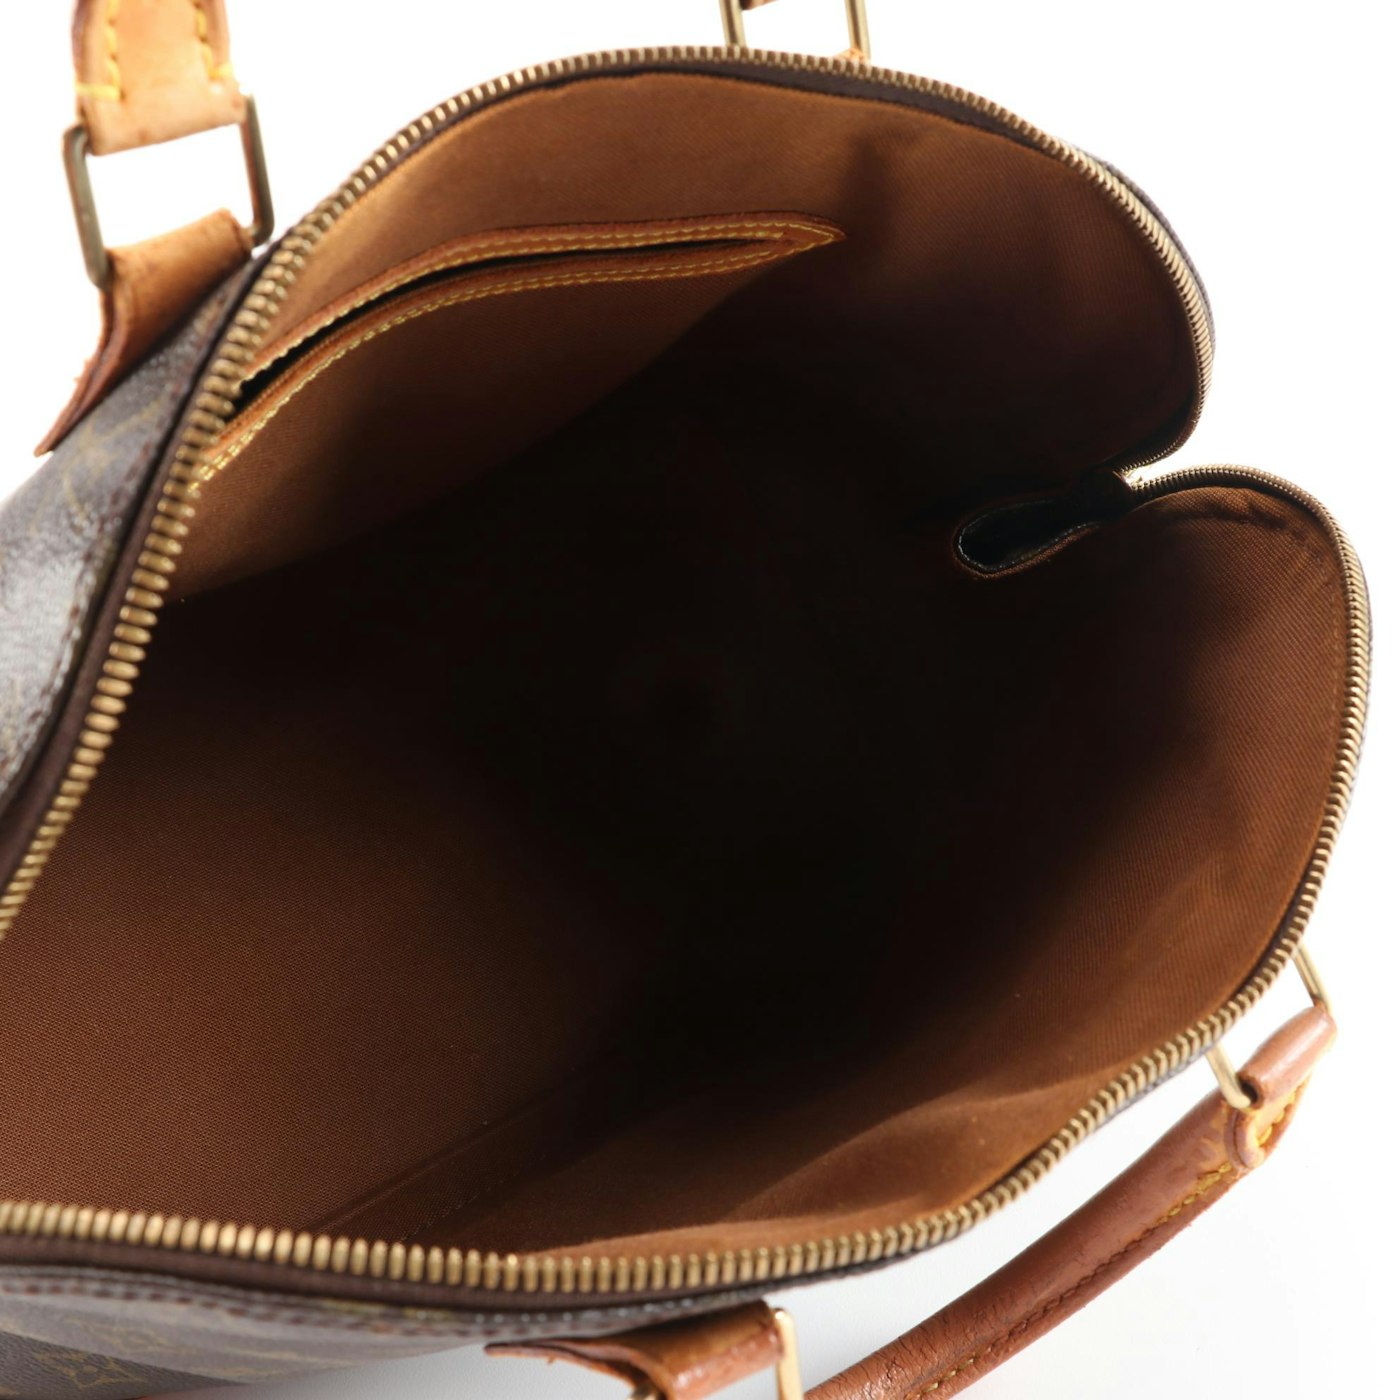 Refurbished Louis Vuitton Alma PM Handbag in Monogram Canvas | EBTH